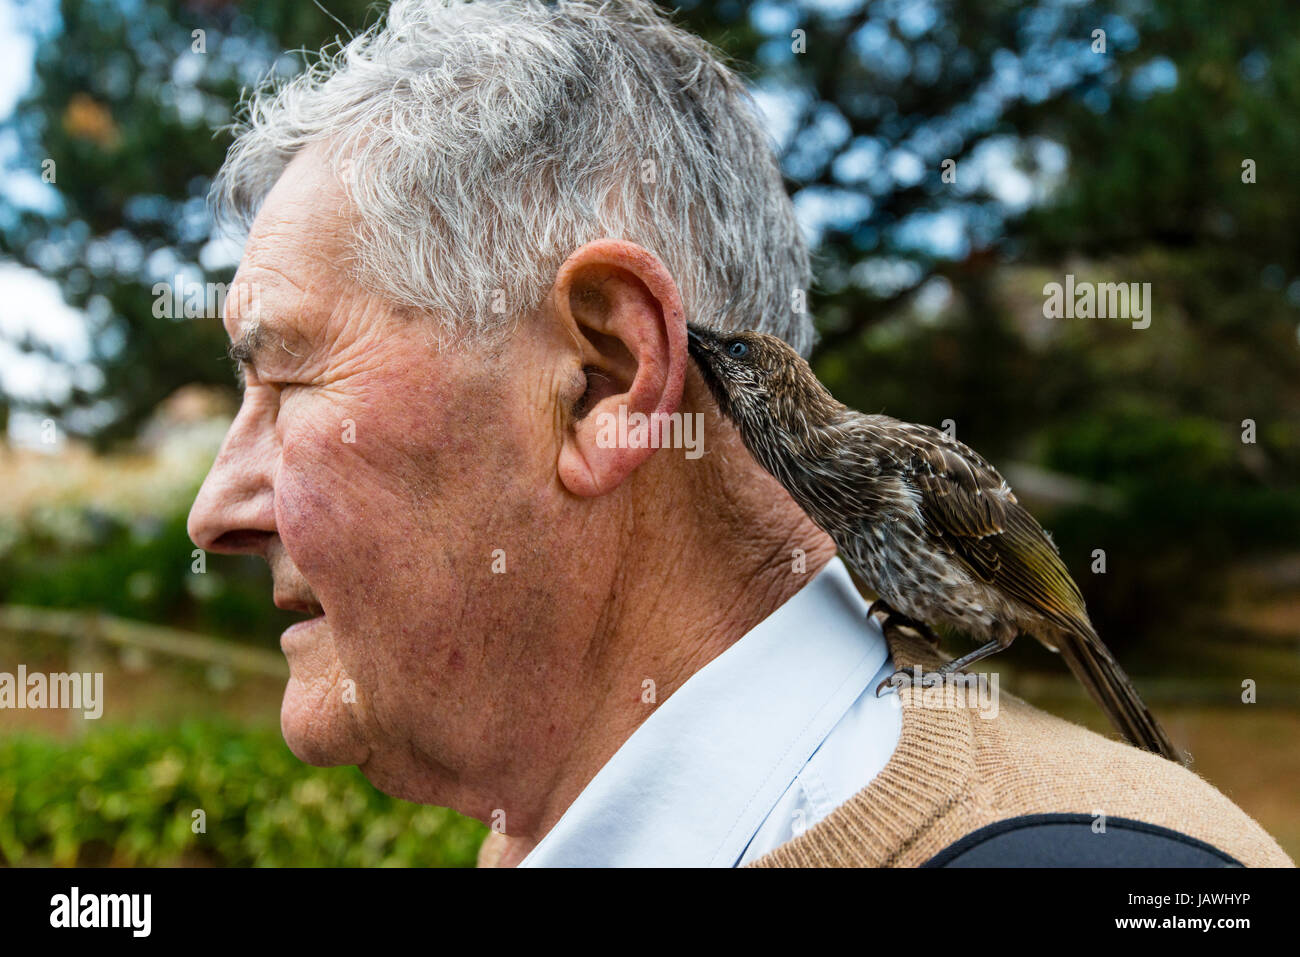 A Wattlebird licking the ear of an elderly man with it's long tongue. Stock Photo